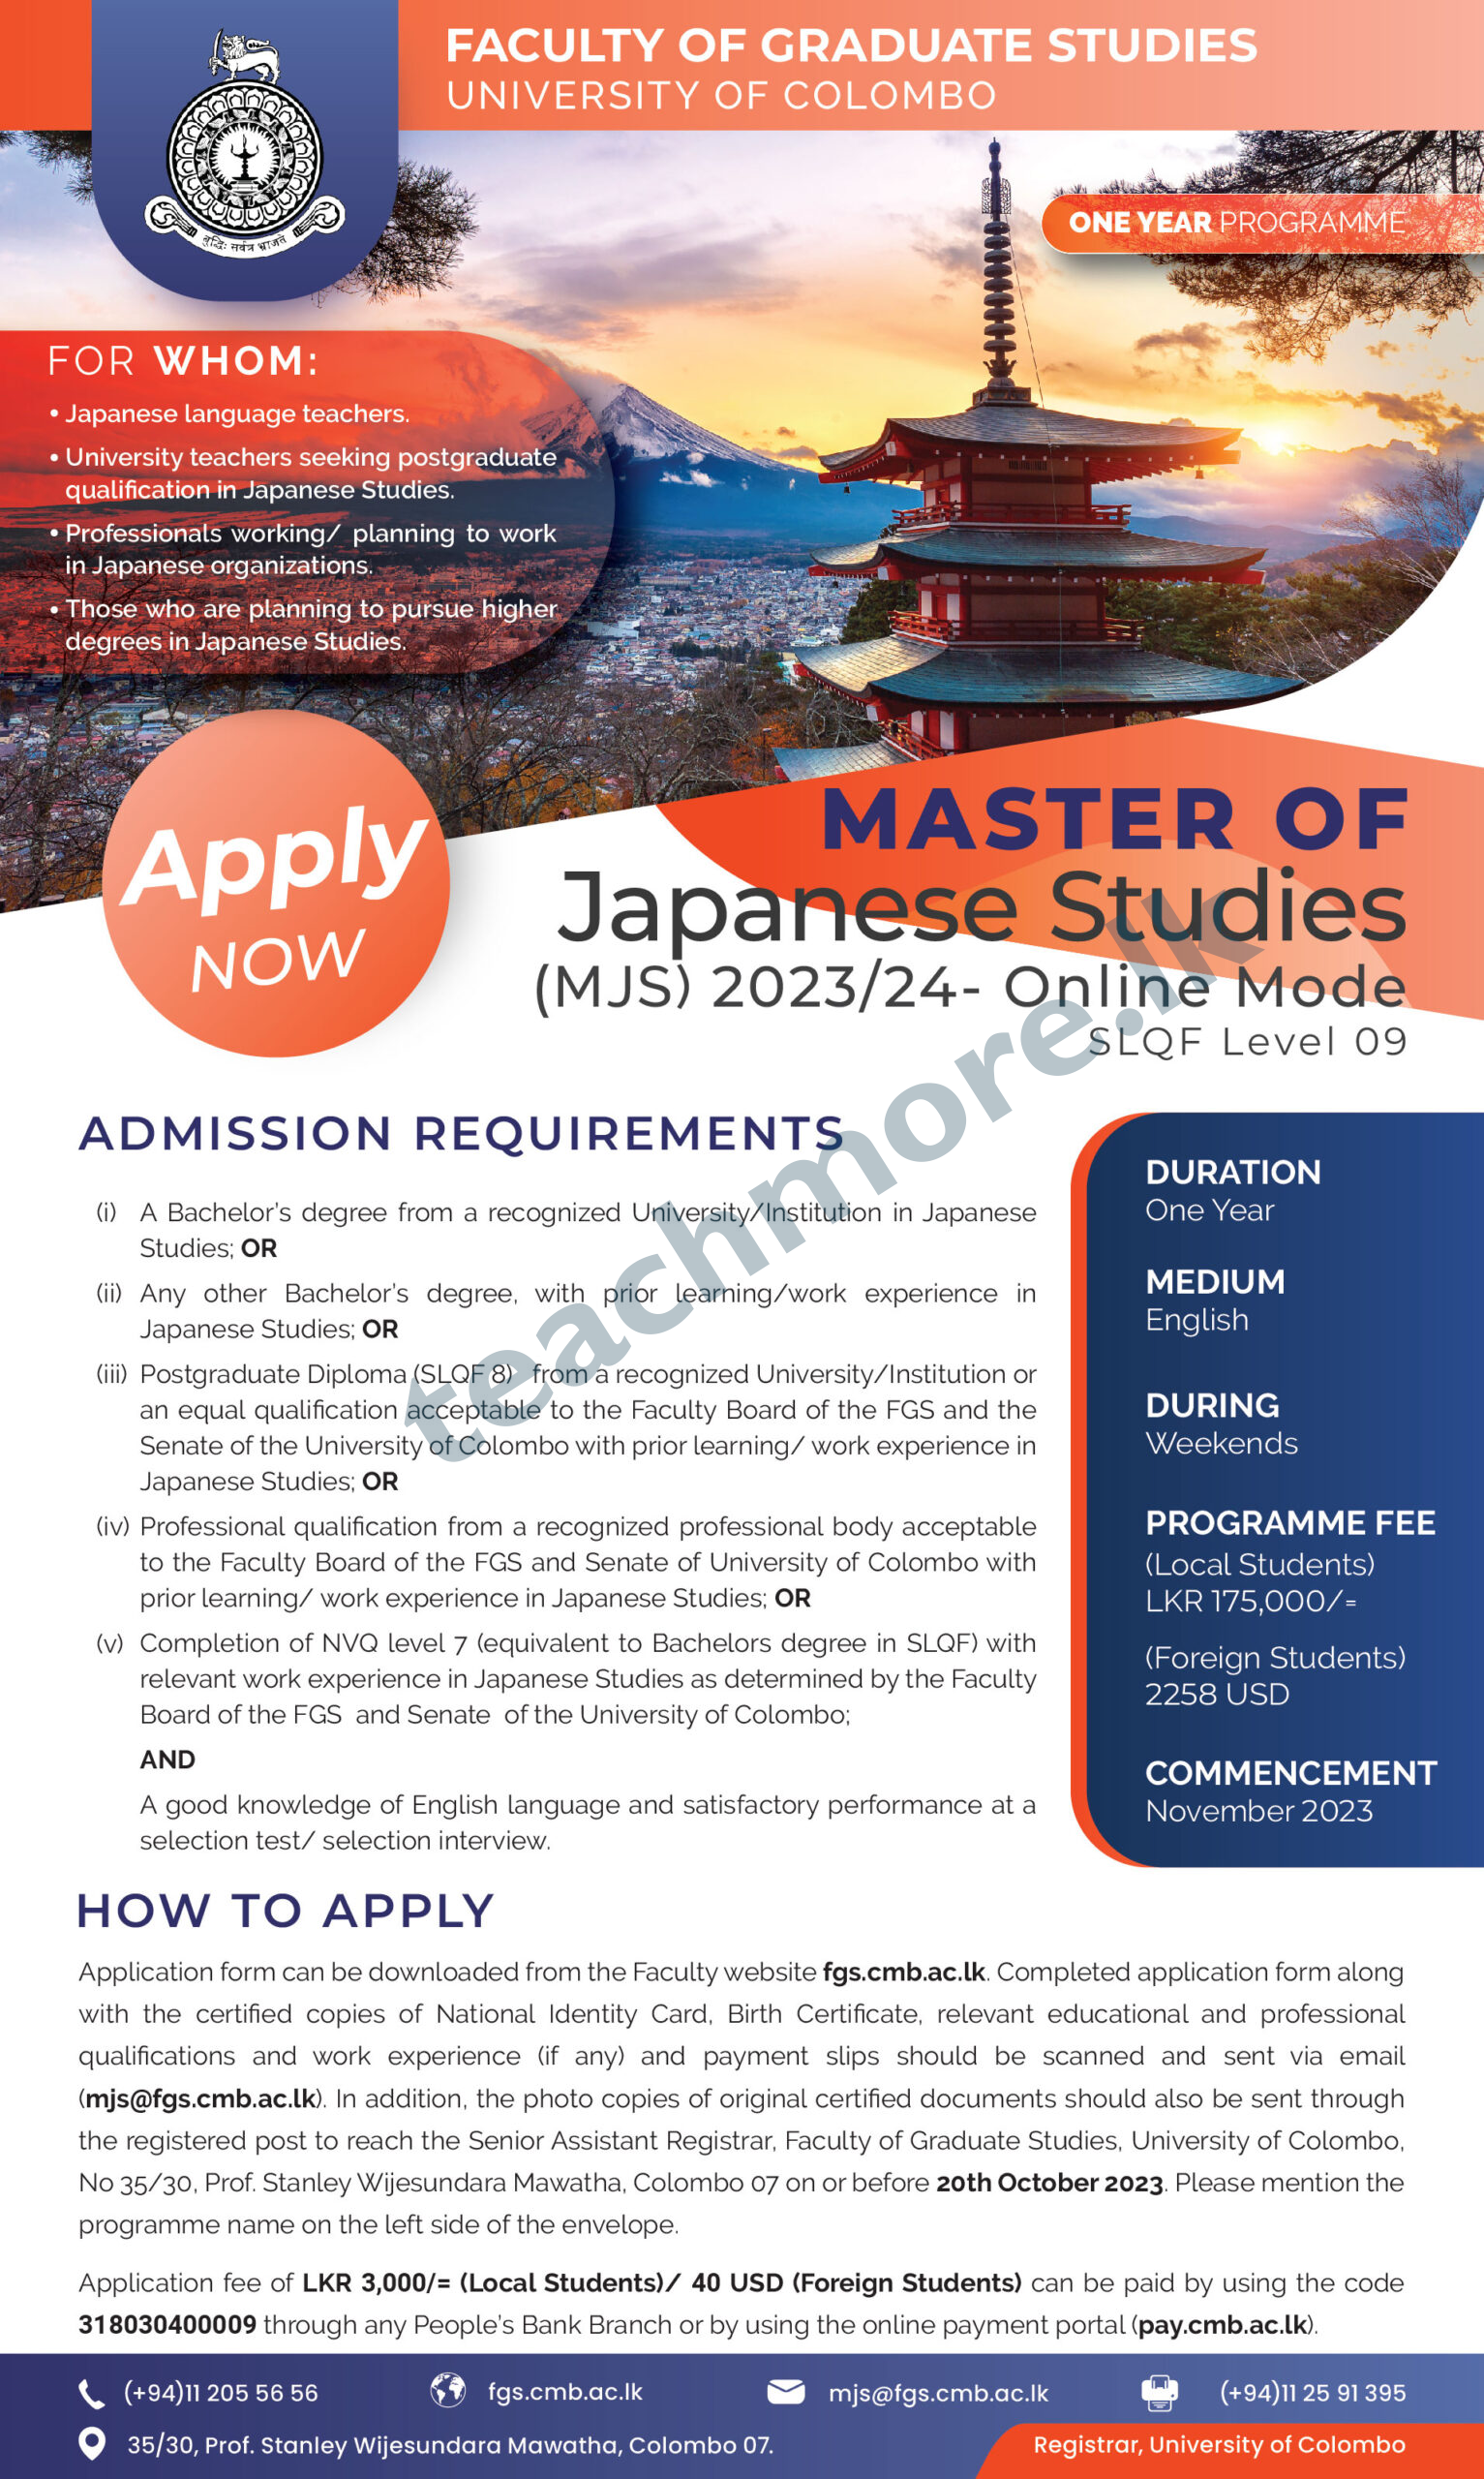 Master of Japanese Studies - MJS 2023/24